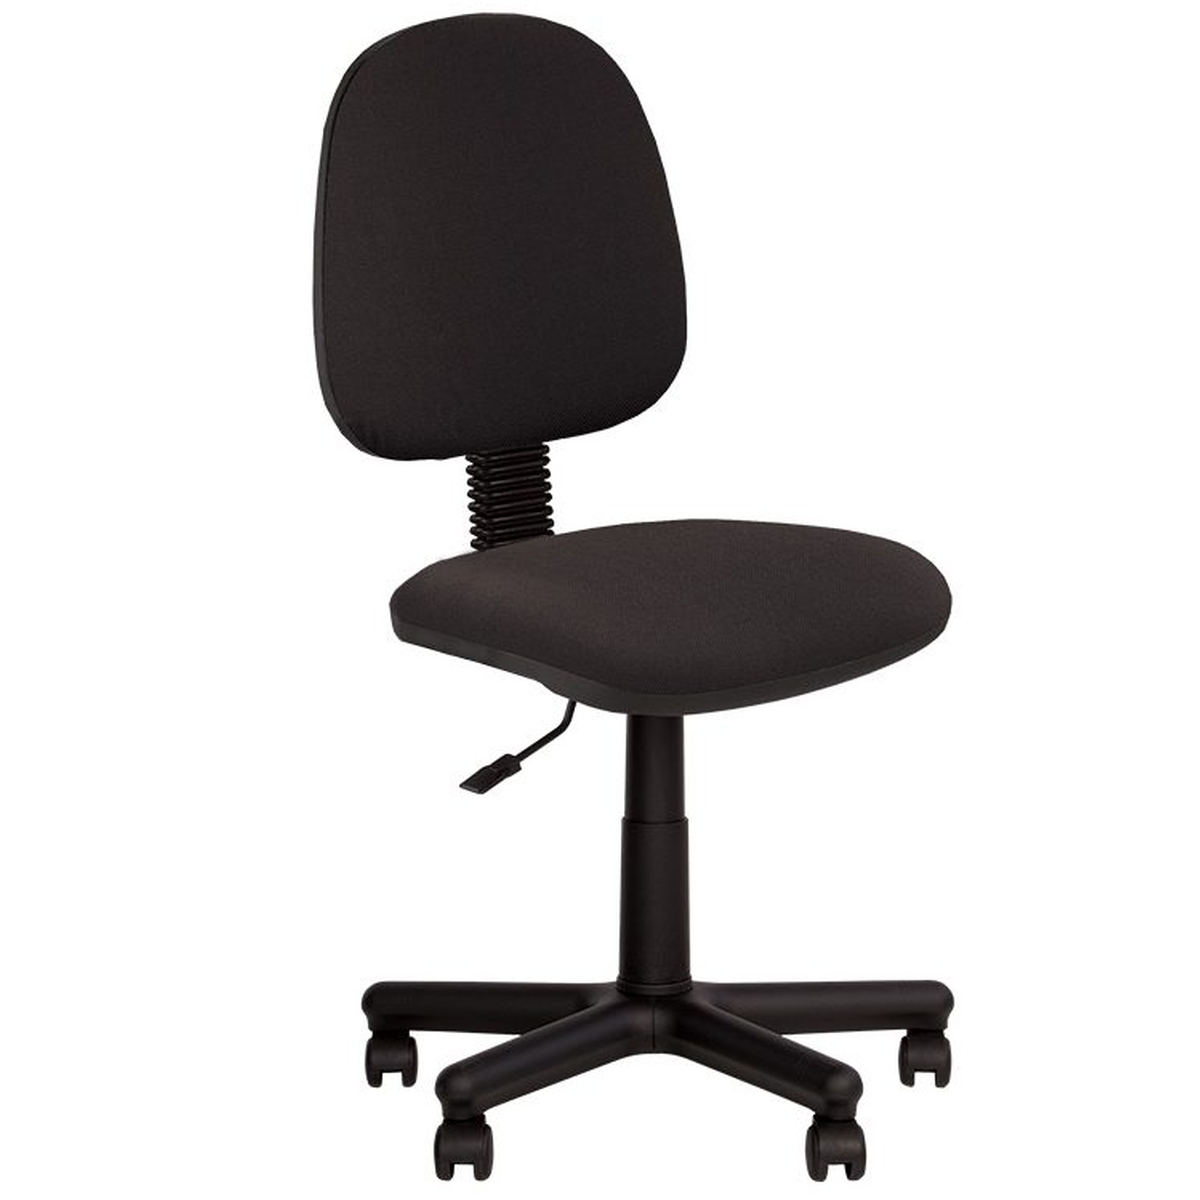 Работен офис стол - Regal черен